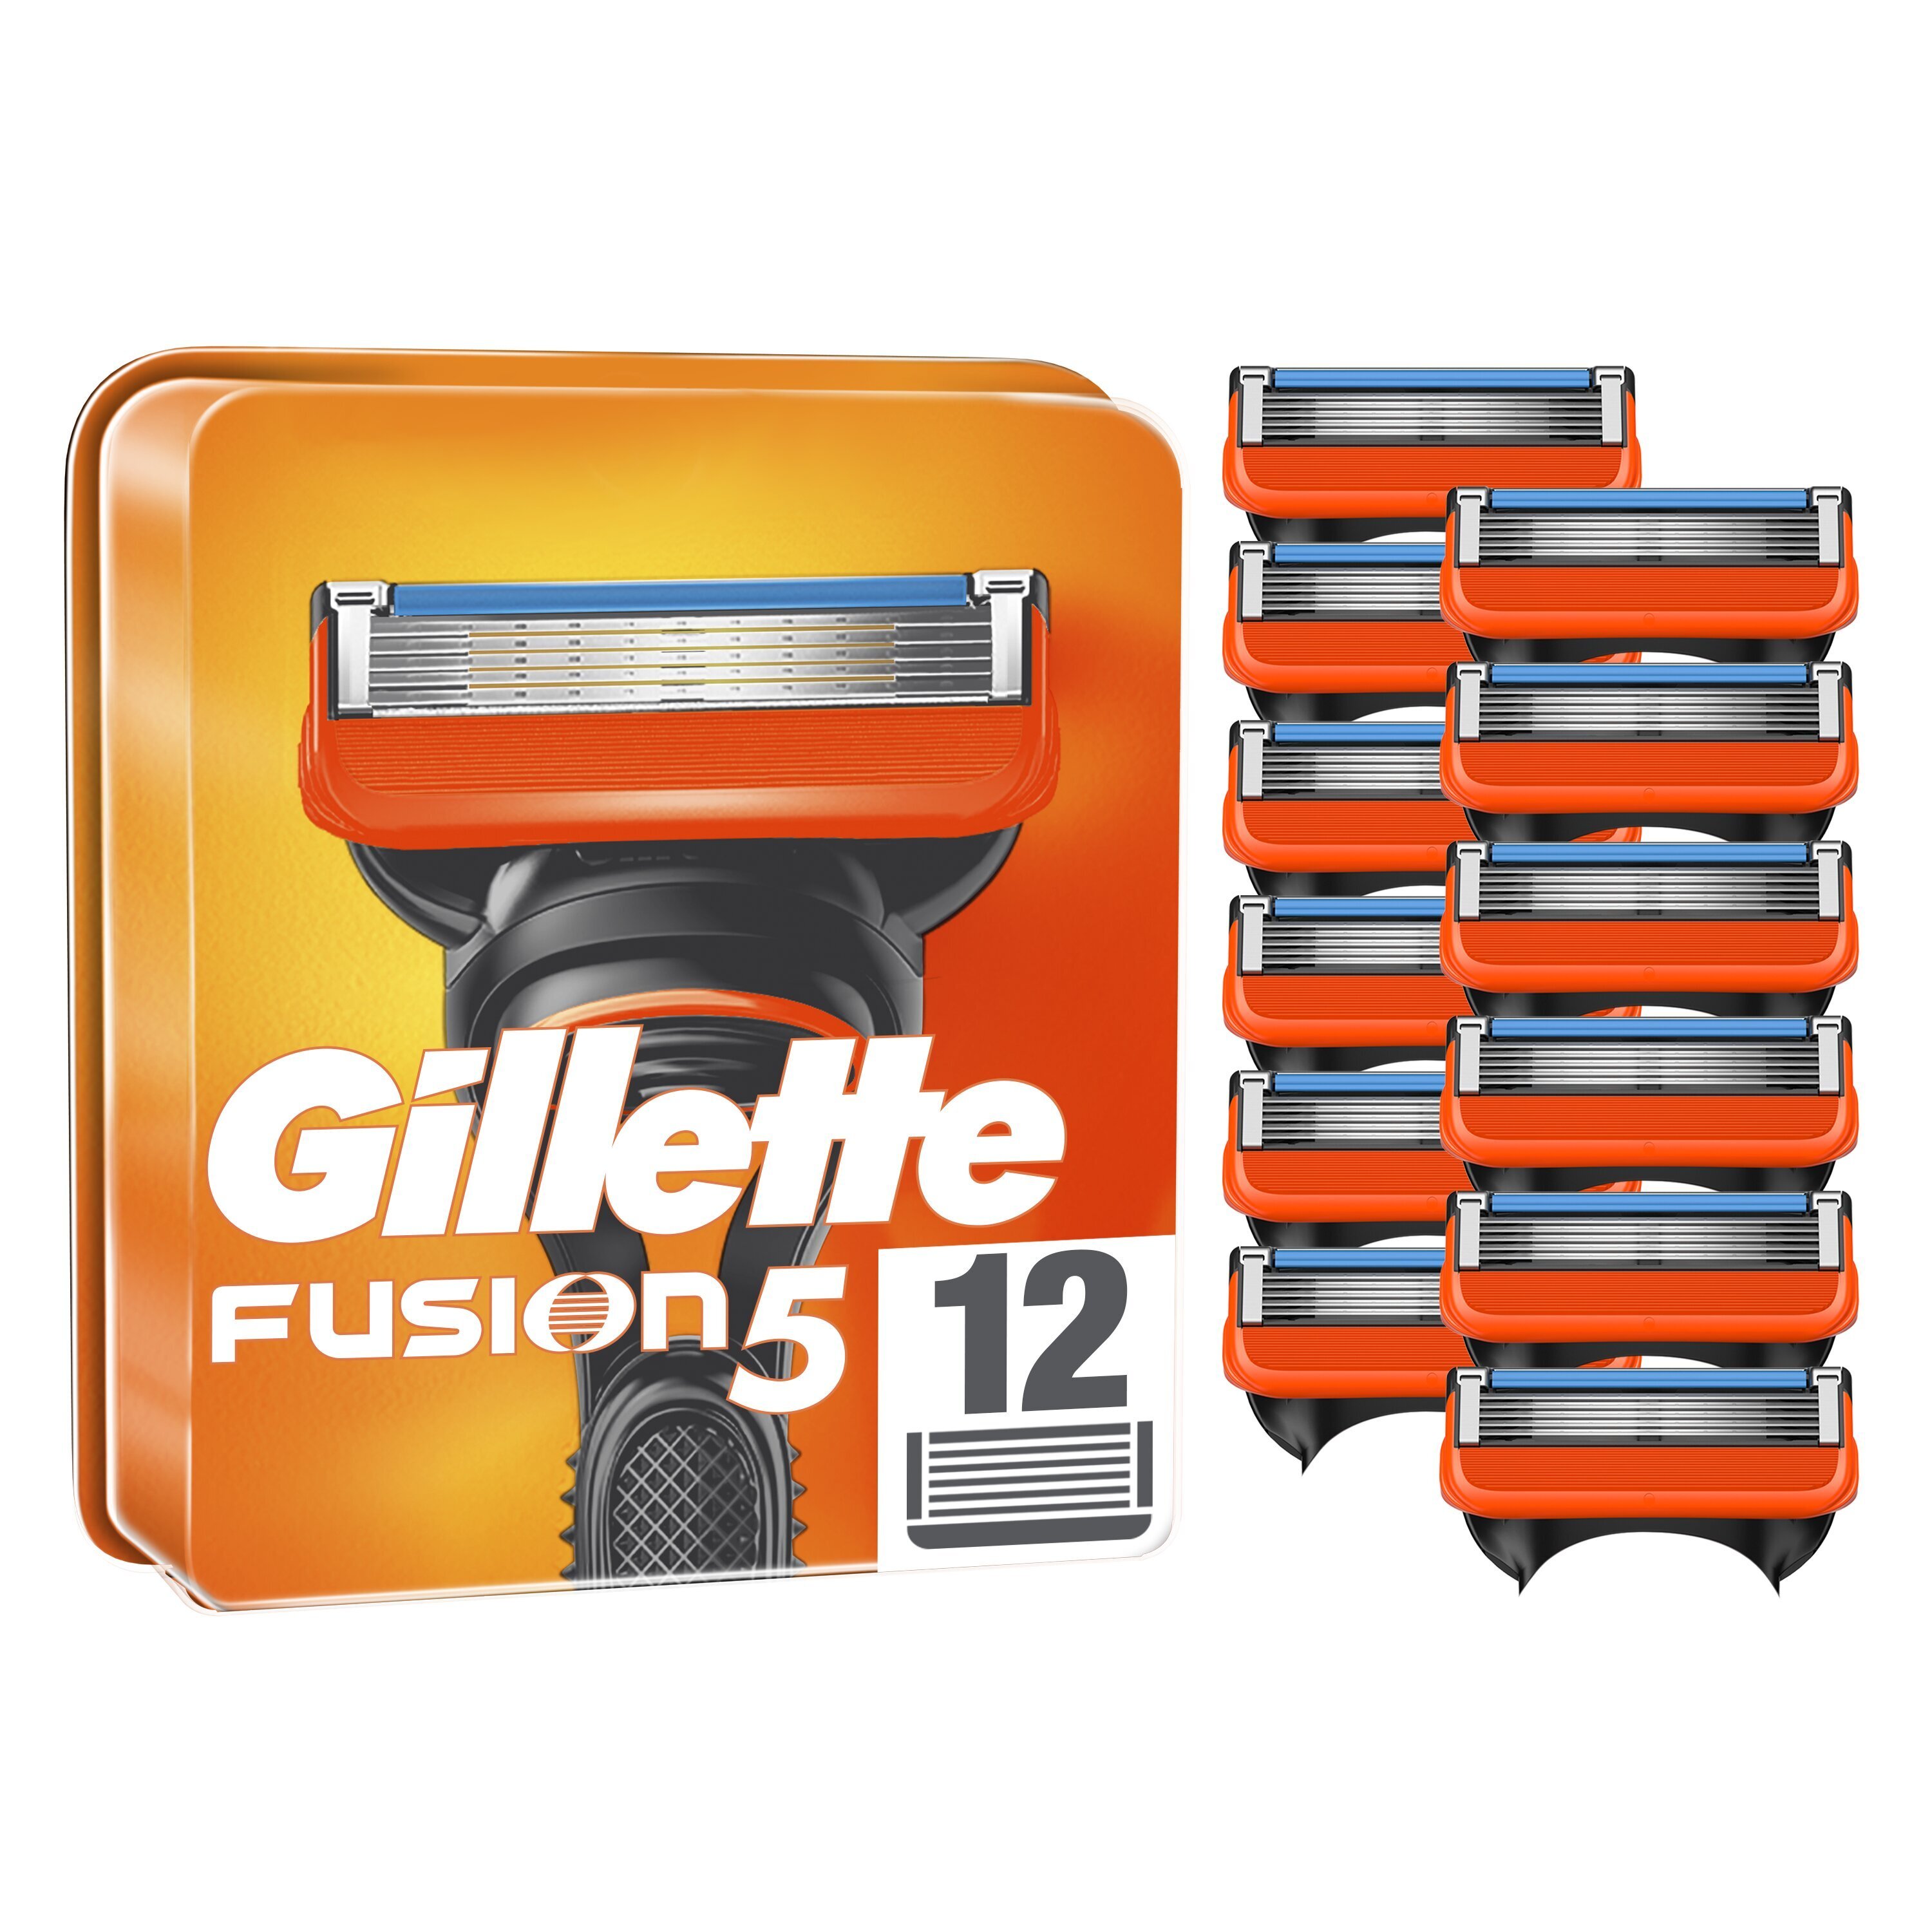 Skustuvo peiliukai Gillette Fusion5, 12 vnt. kaina | pigu.lt